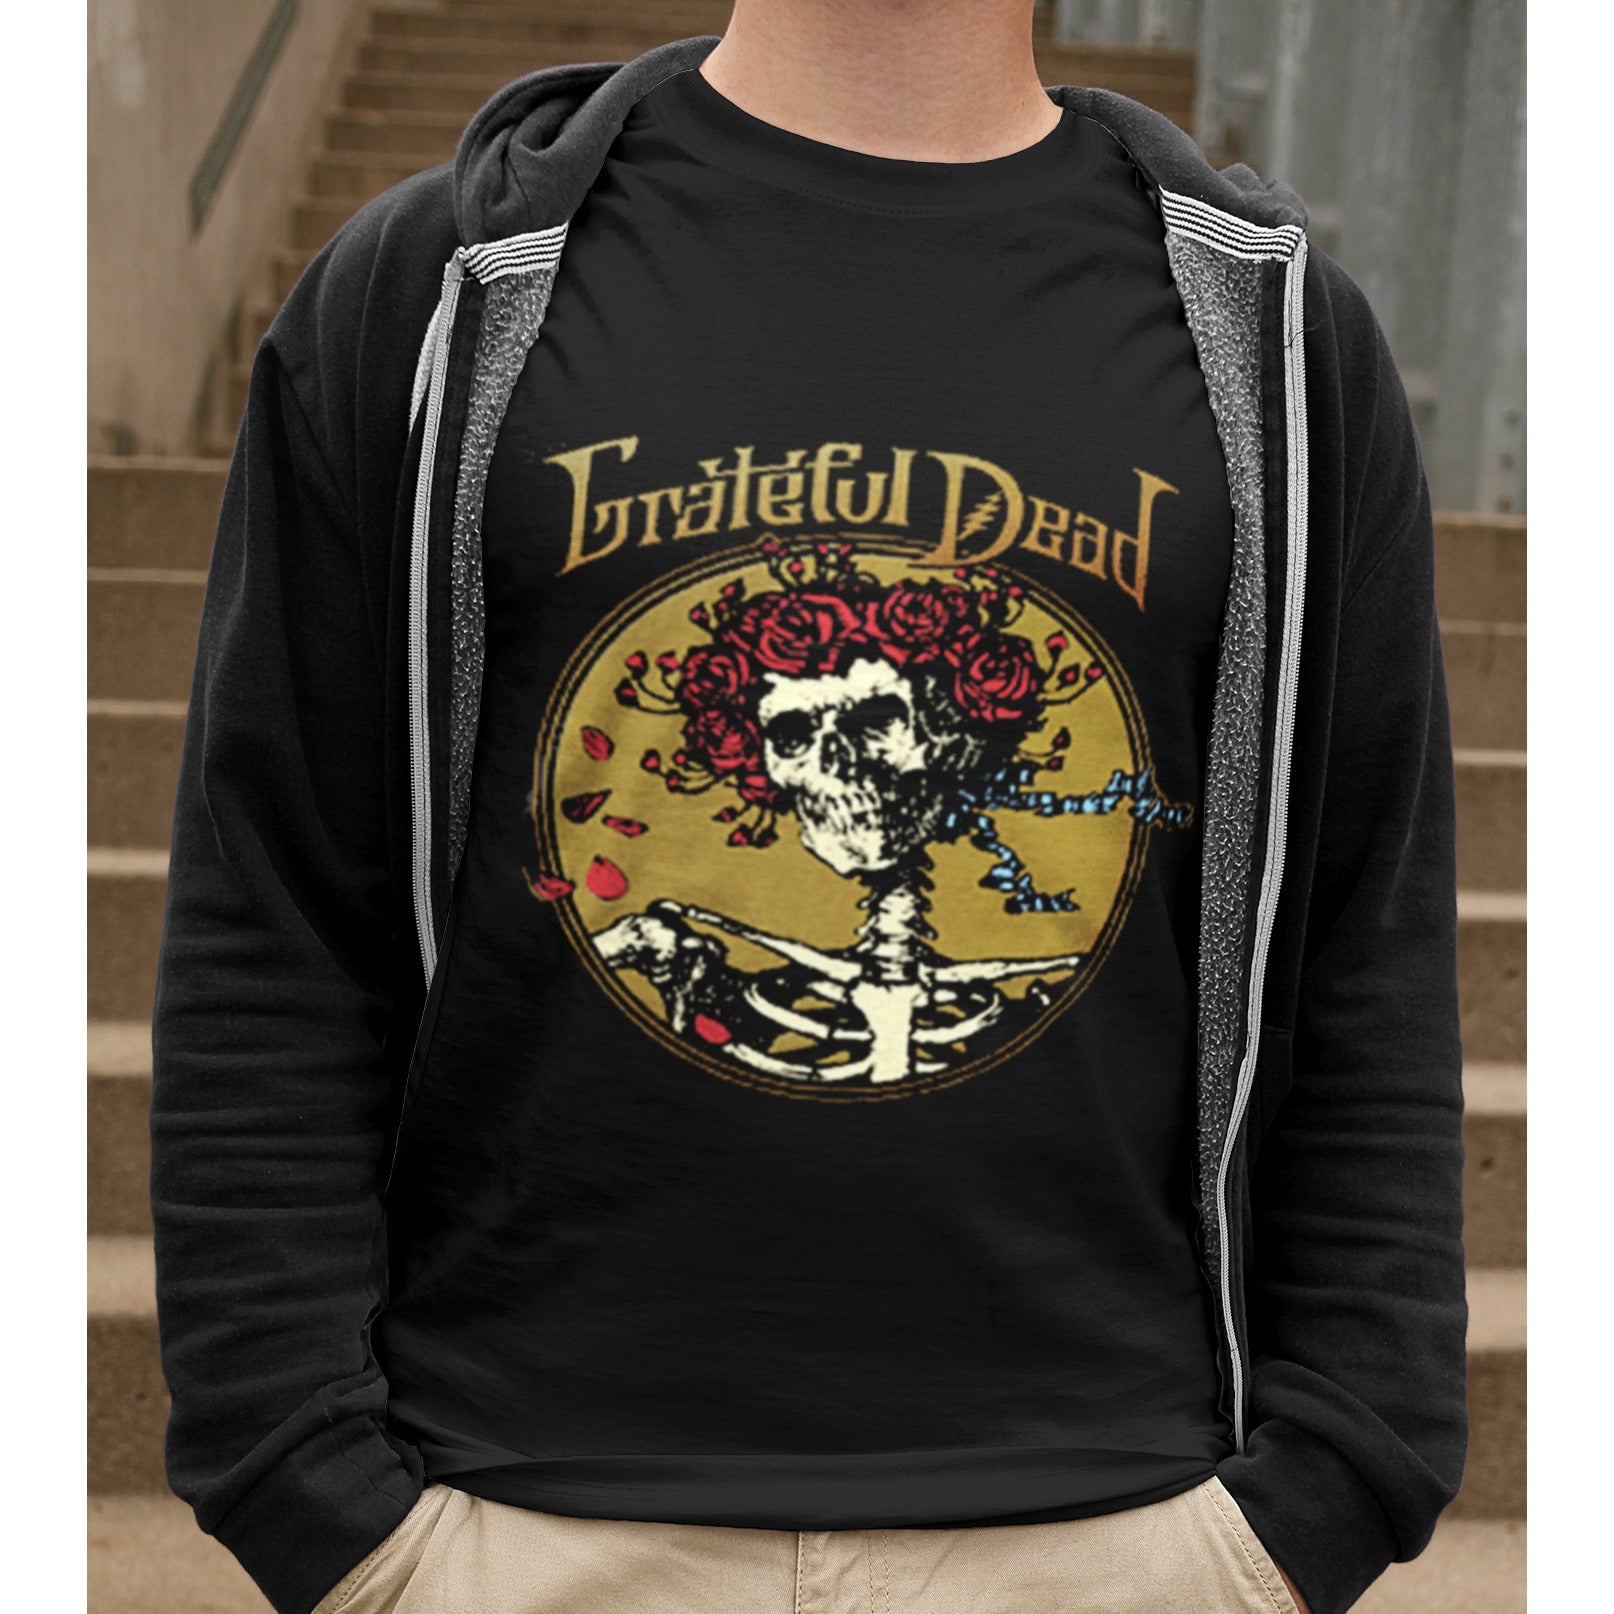 Jasper's Curiosity Grateful Dead Skull & Roses T-Shirt in Black, Men's Unisex, 100% Cotton in Classic Standard Fit Small